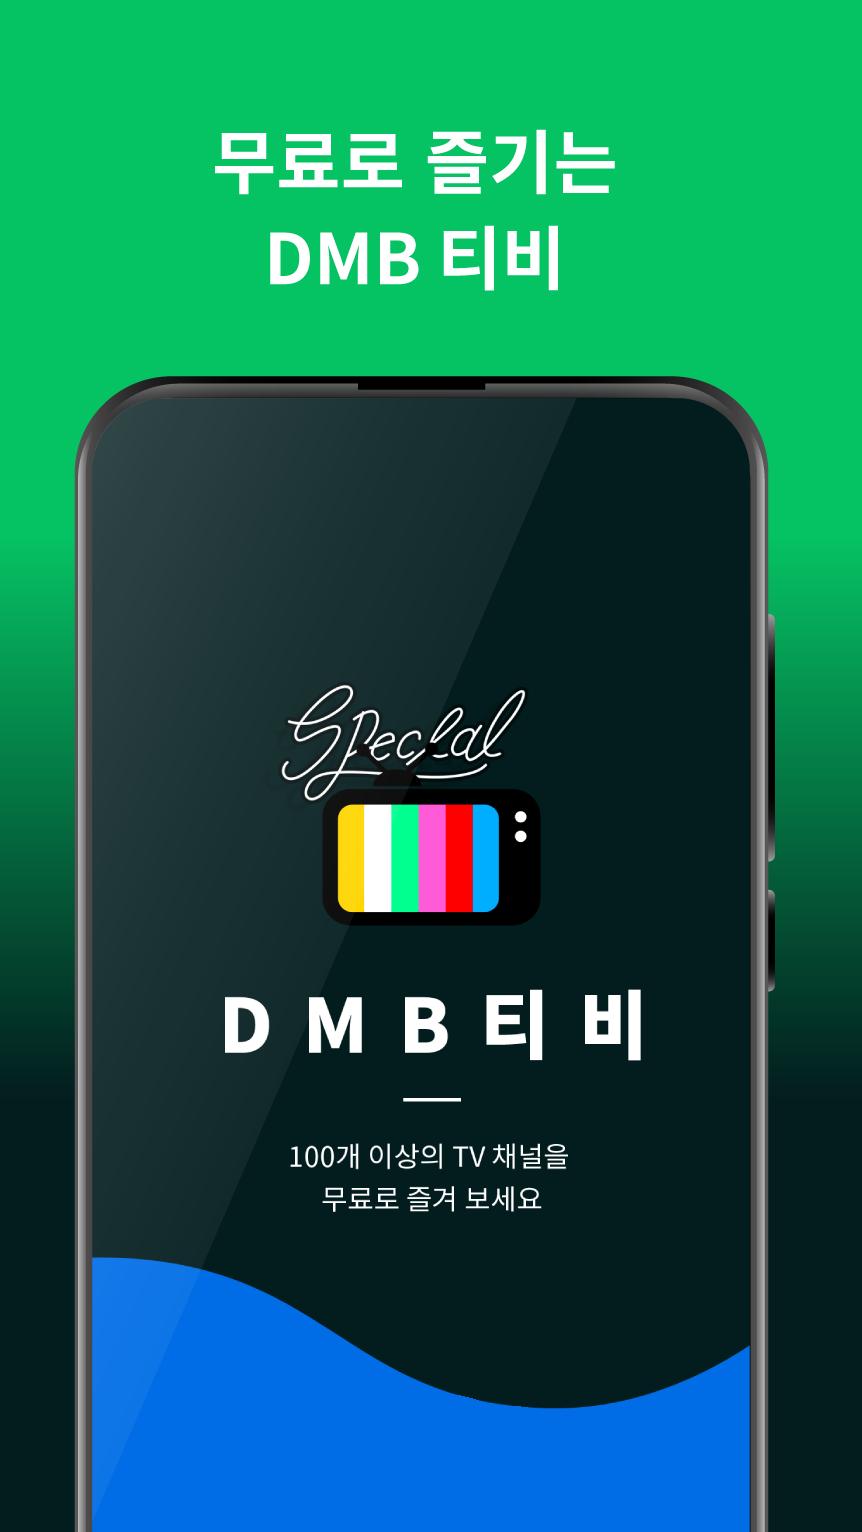 DMB TV 실시간무료TV, 실시간TV 방송, 지상파, 디엠비 방송시청, 모바일 무료티비 1.0.1 Screenshot 1